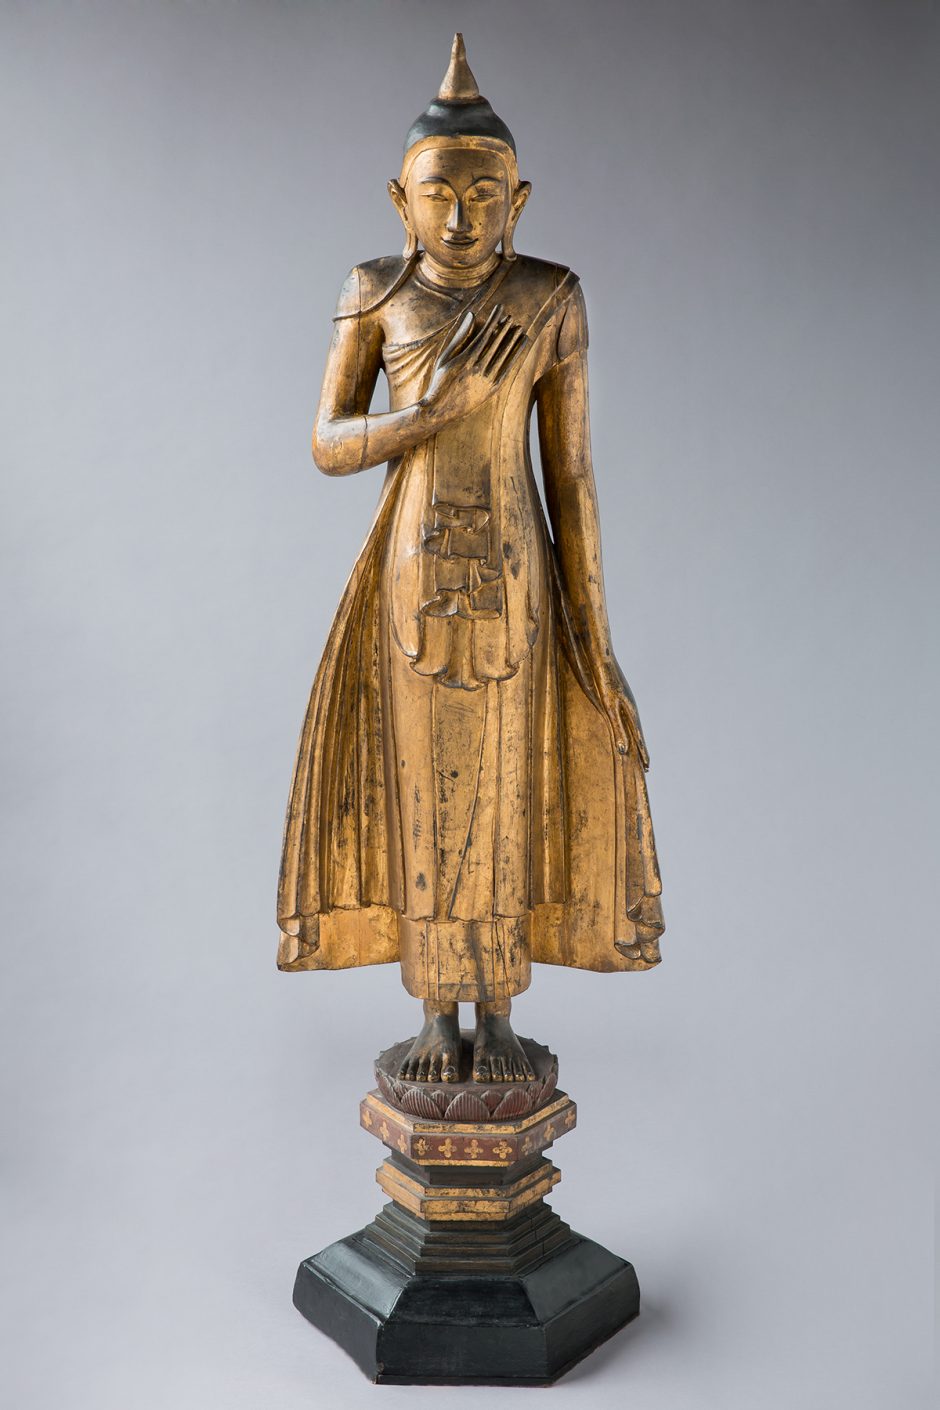 Figure, gold, lacquered showing Siddharta Gautama